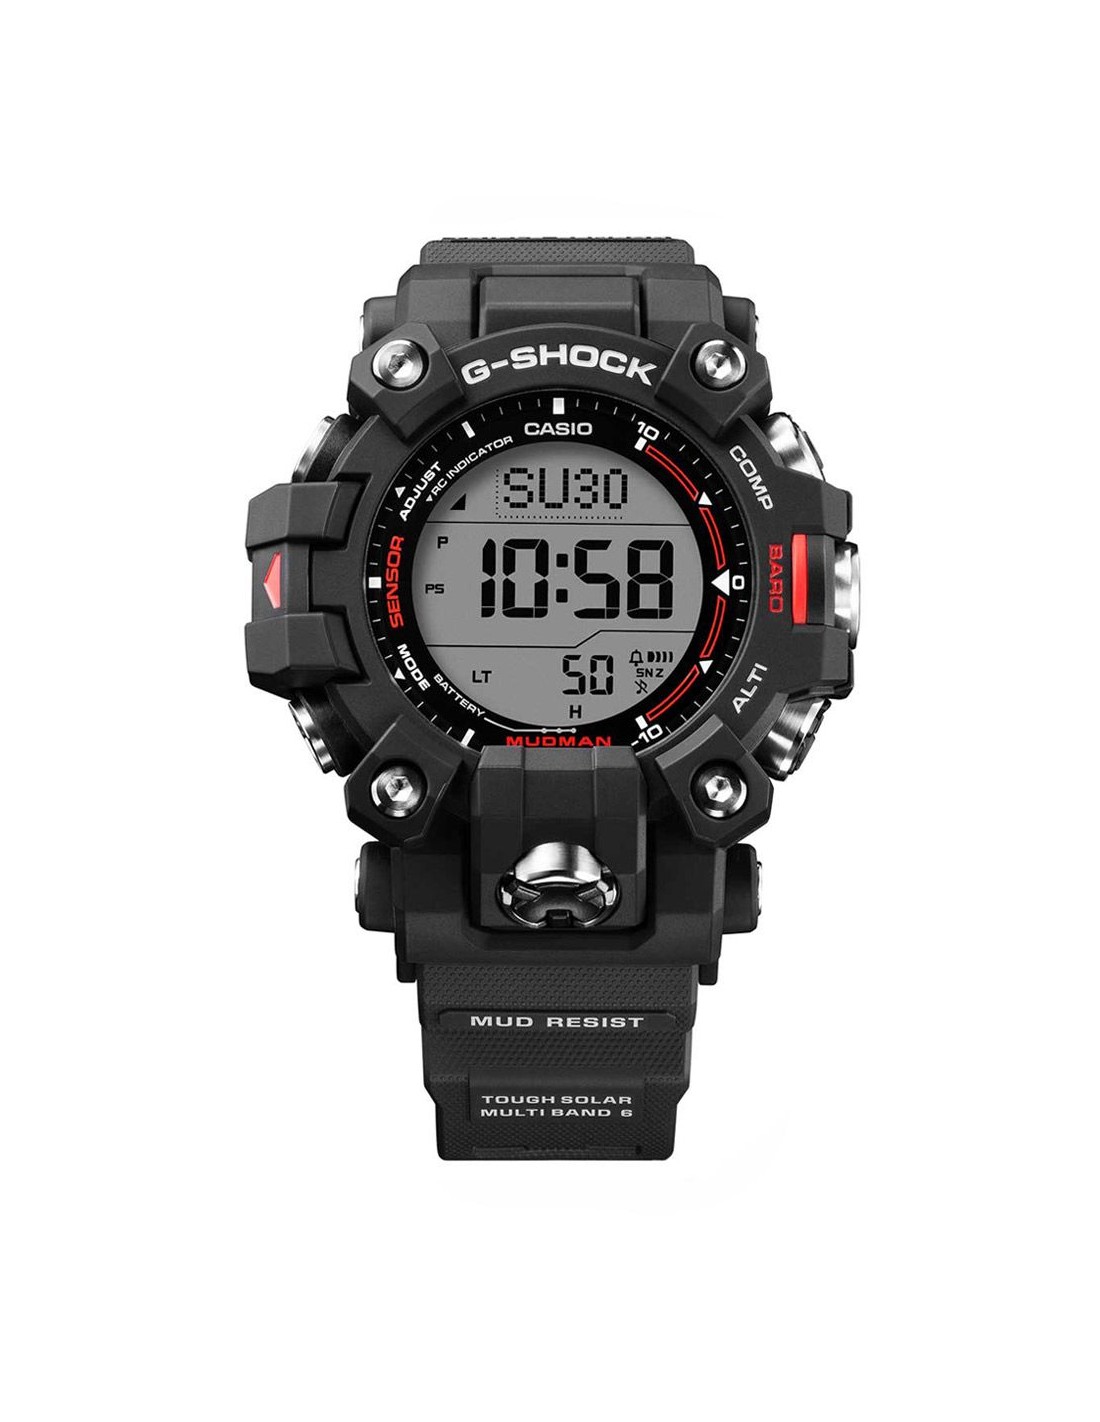 Reloj G-SHOCK modelo GW-9500-1A4ER marca Casio Hombre — Watches All Time